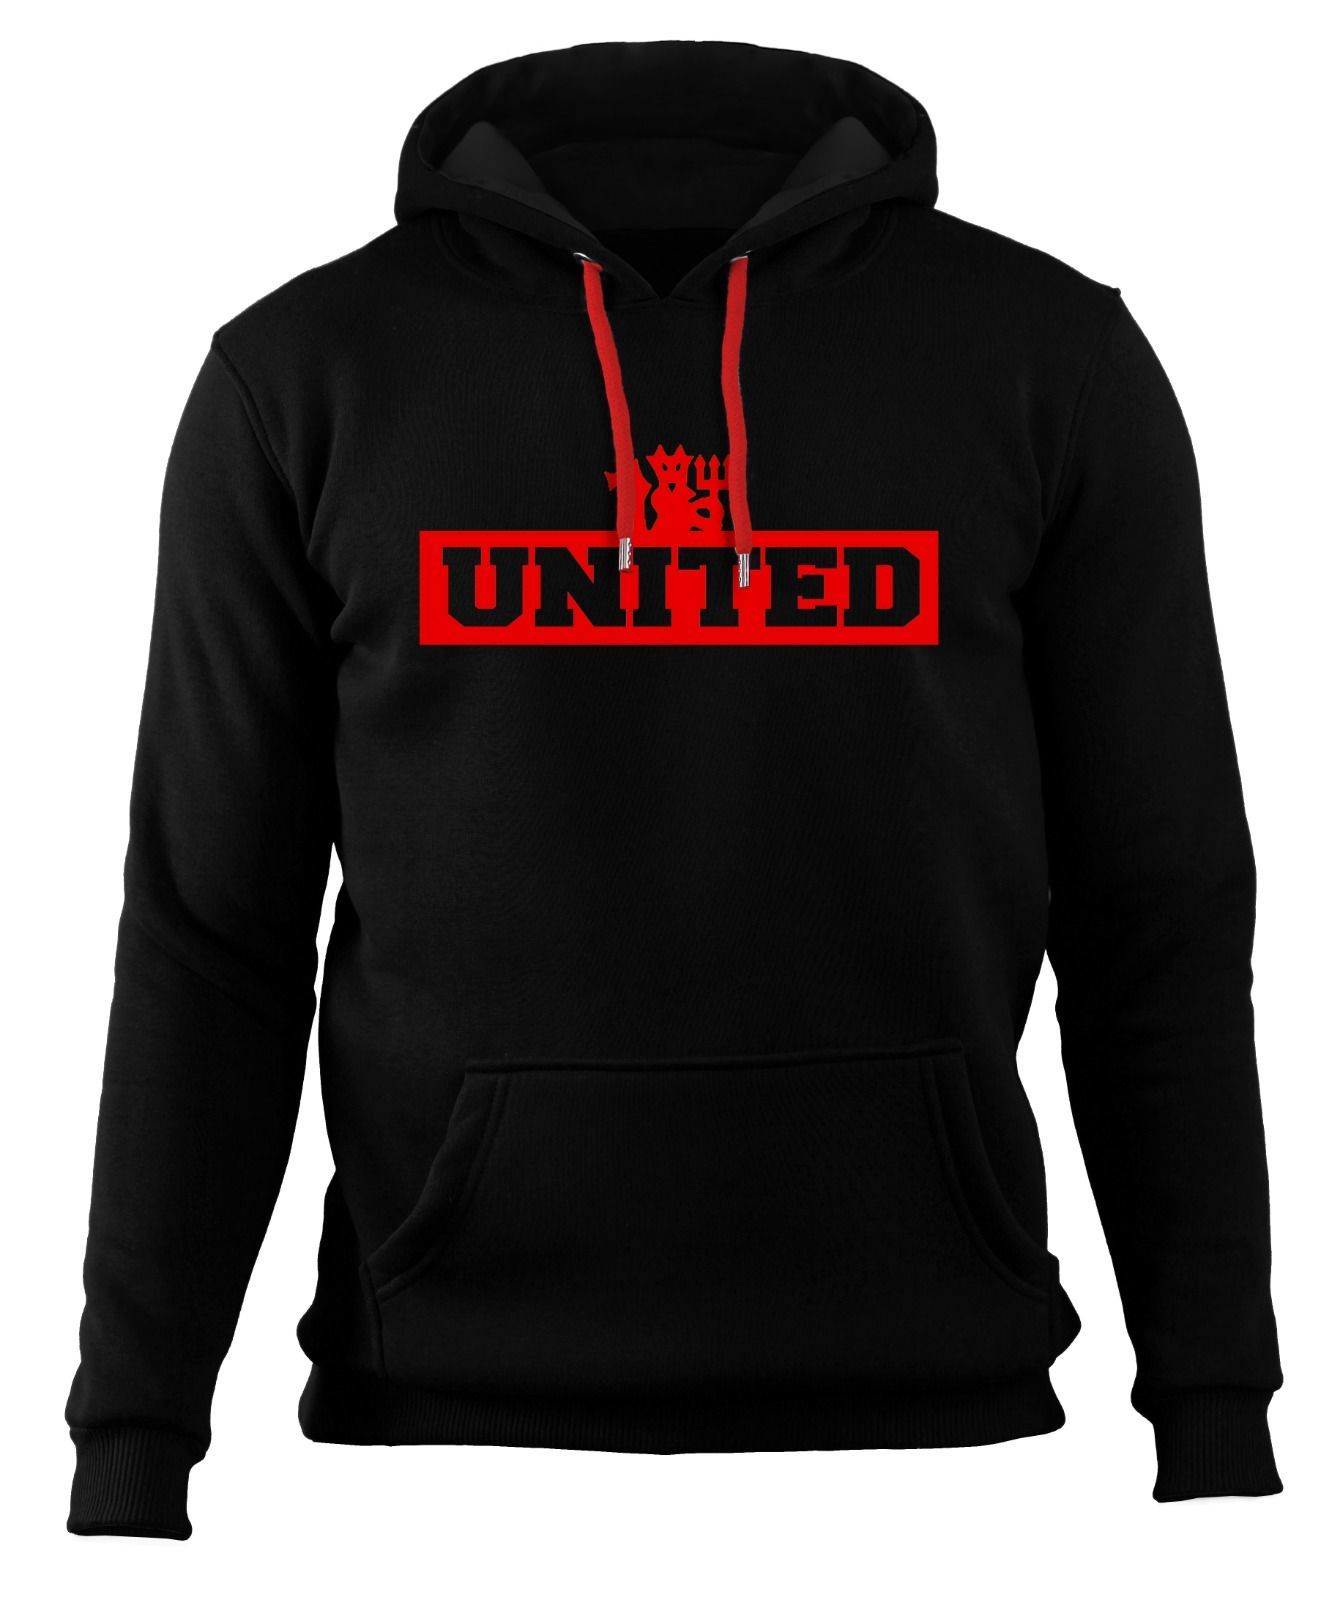 Manchester United - Manchester 'United' Sweatshirt